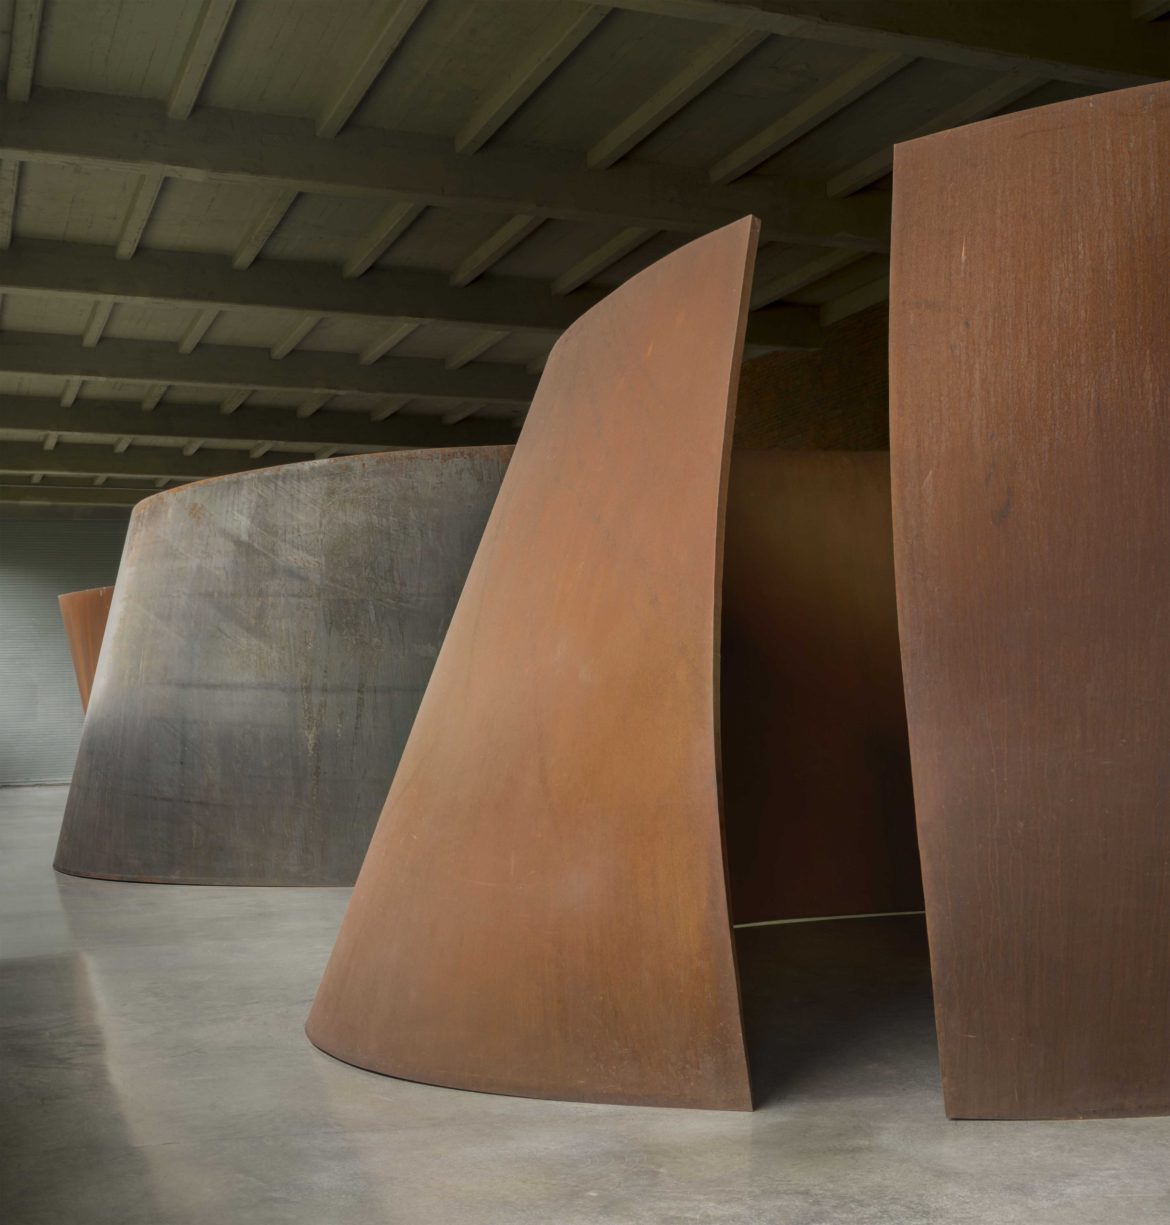 Richard Serra art at Dia-Beacon